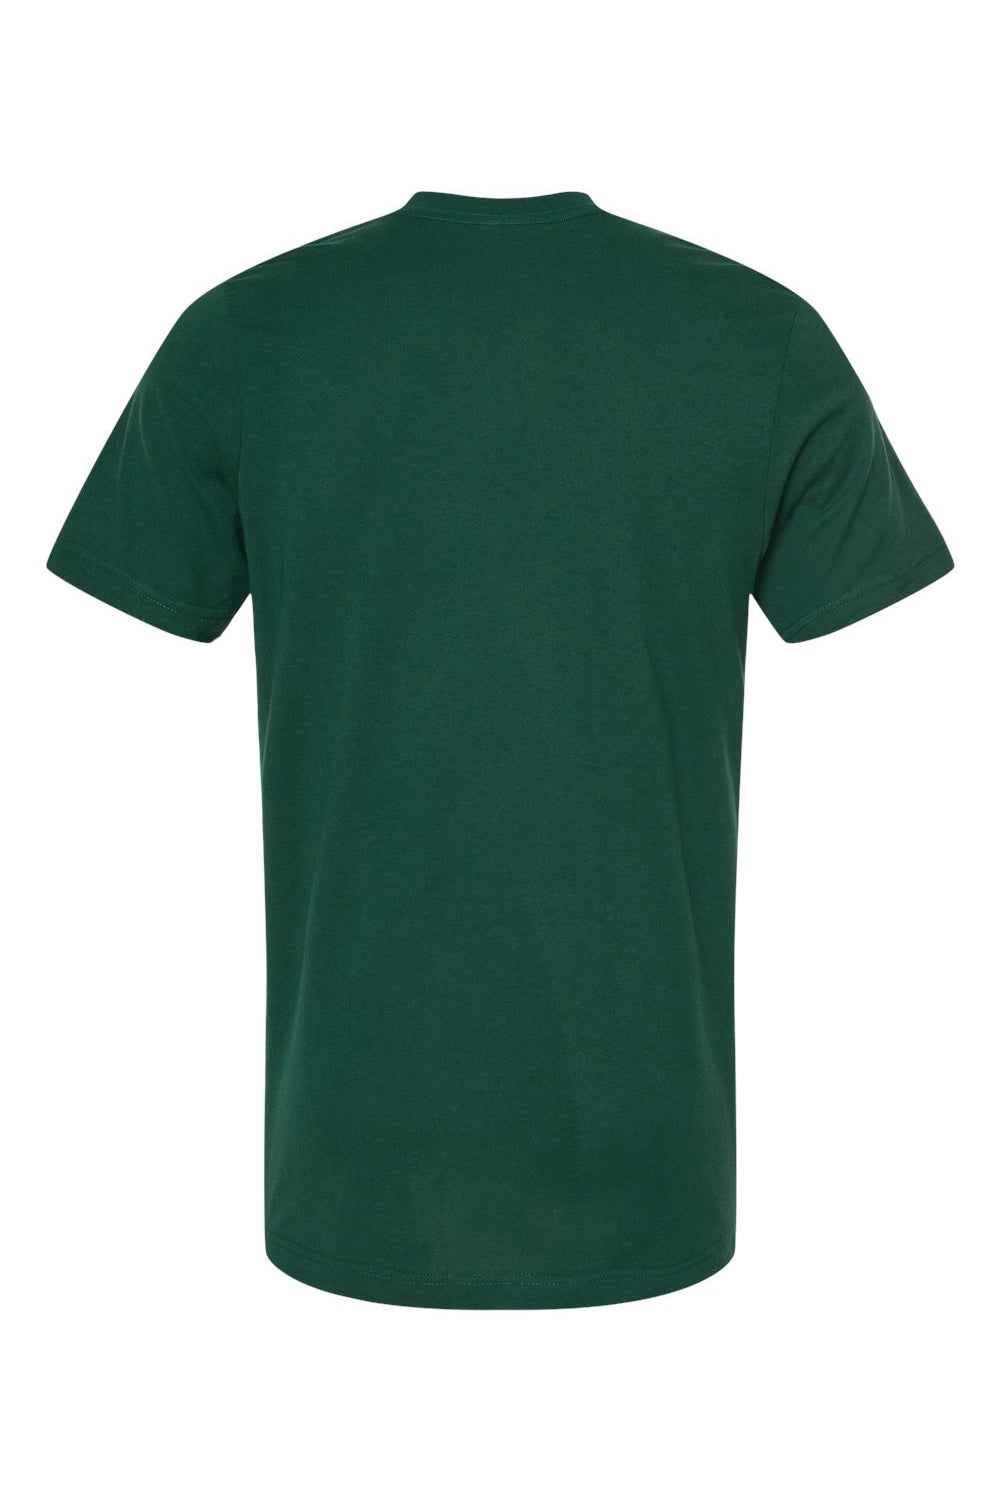 Tultex 602 Mens Short Sleeve Crewneck T-Shirt Forest Green Flat Back